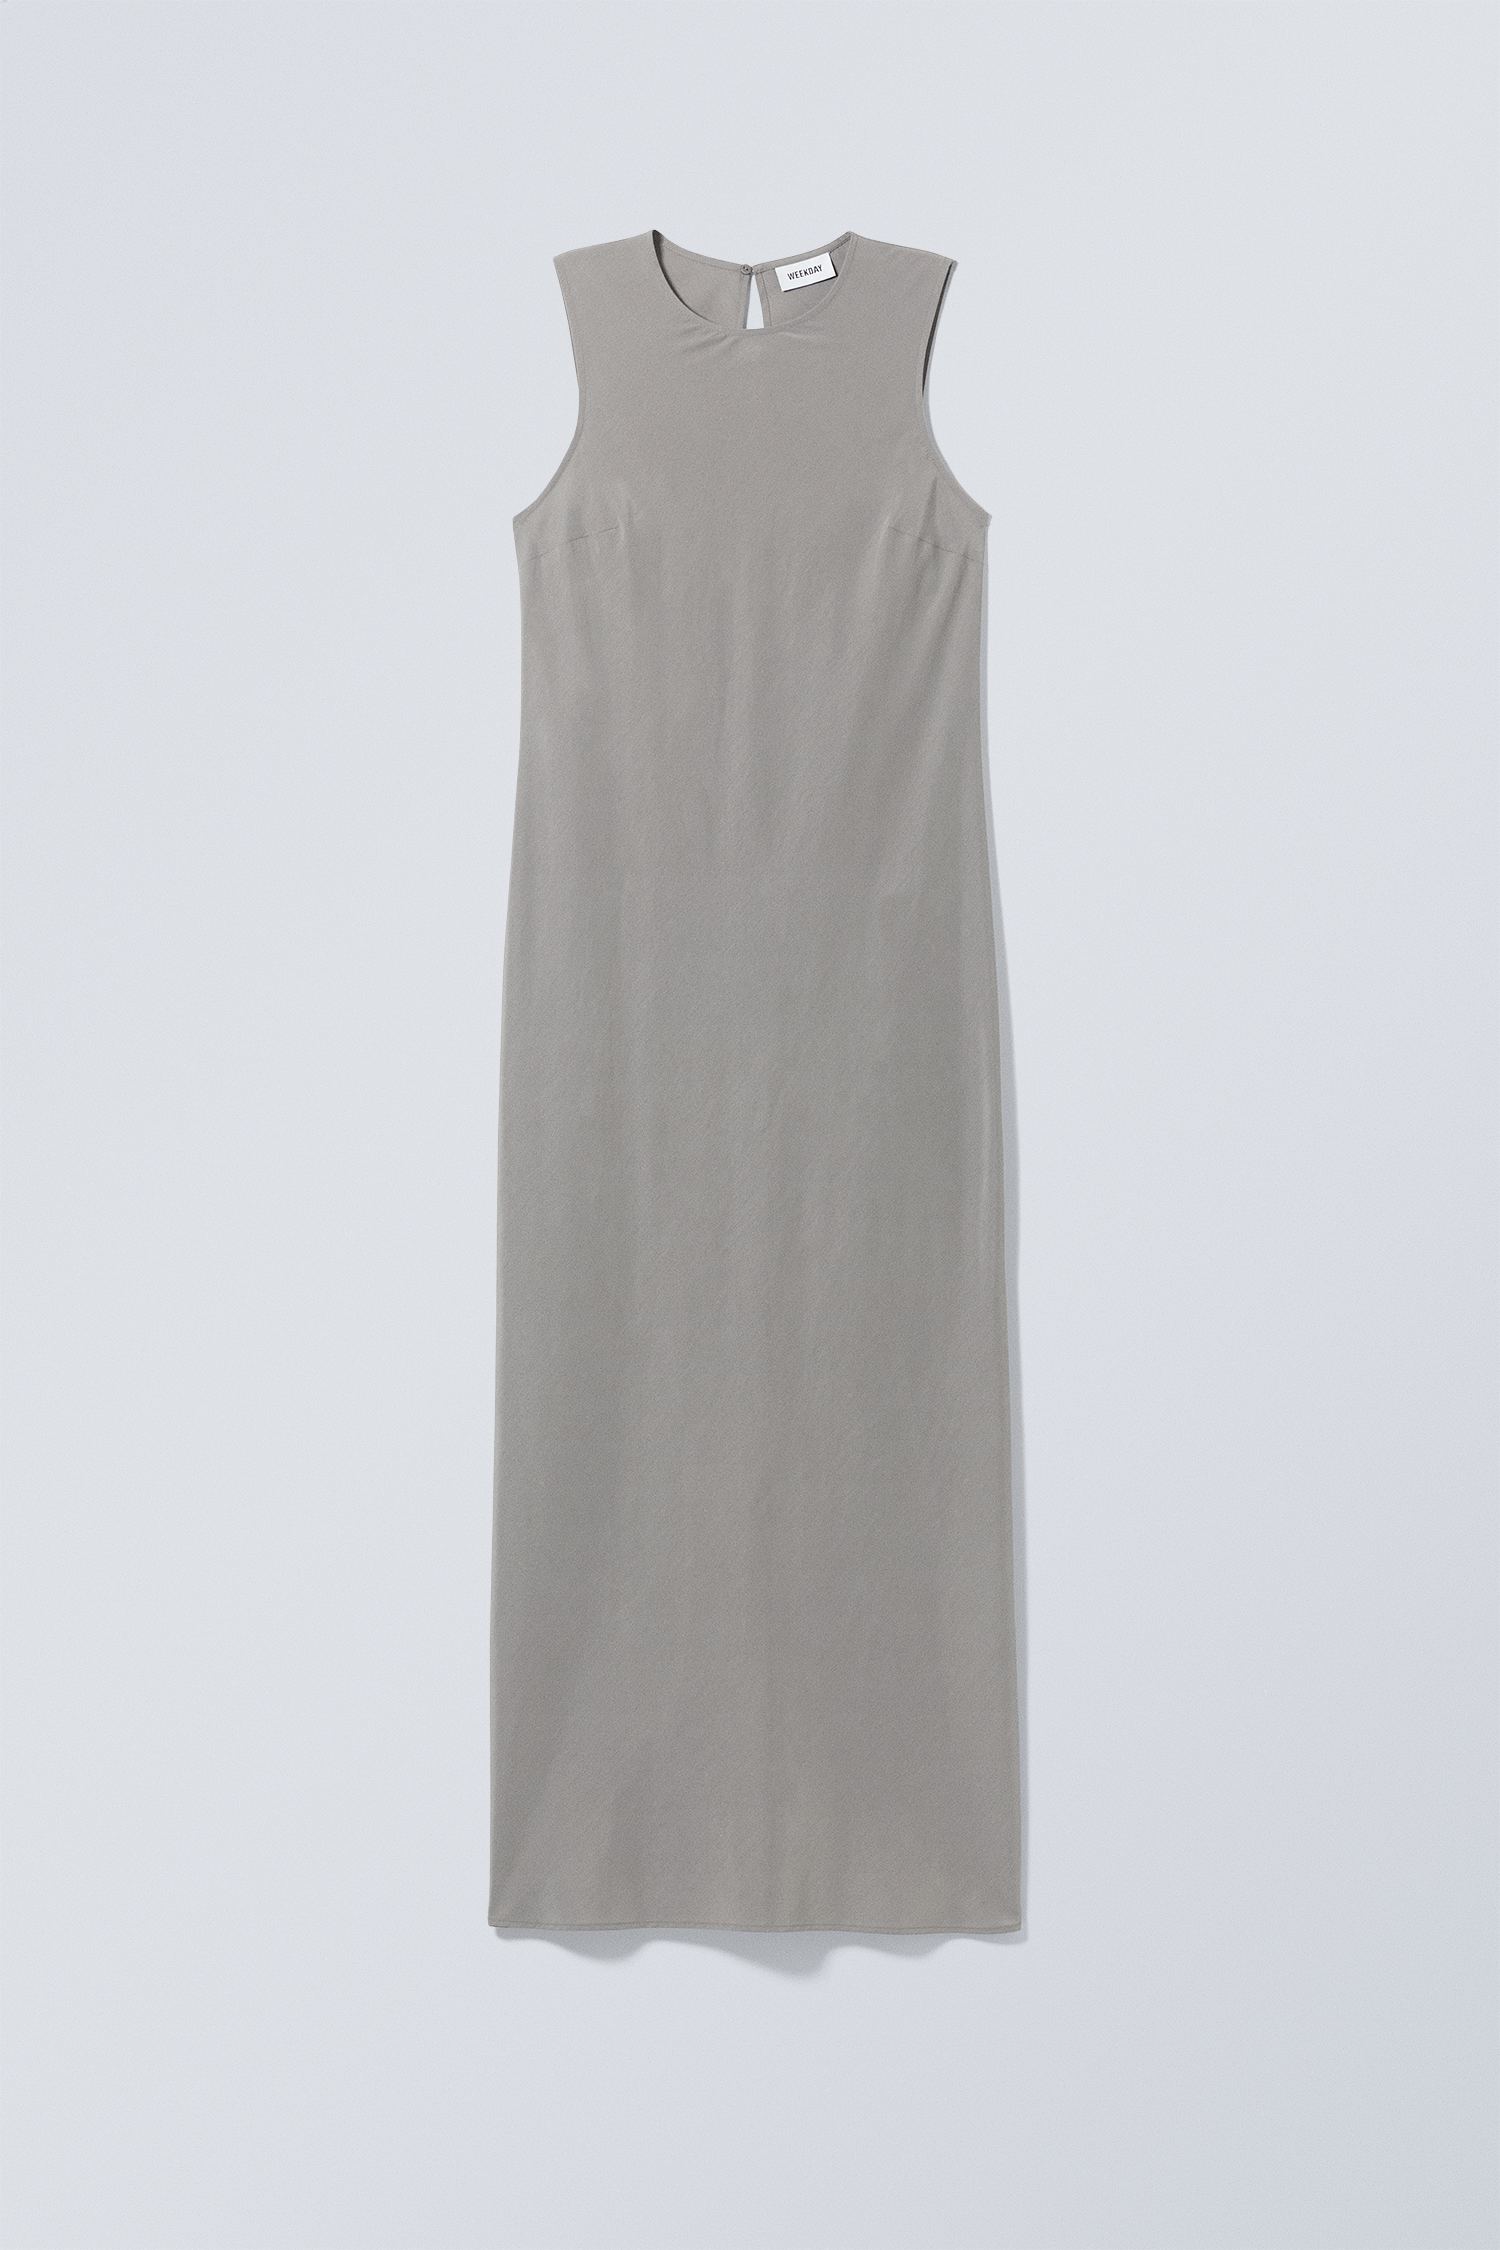 #878587 - Hanna Long Tank Dress - 1